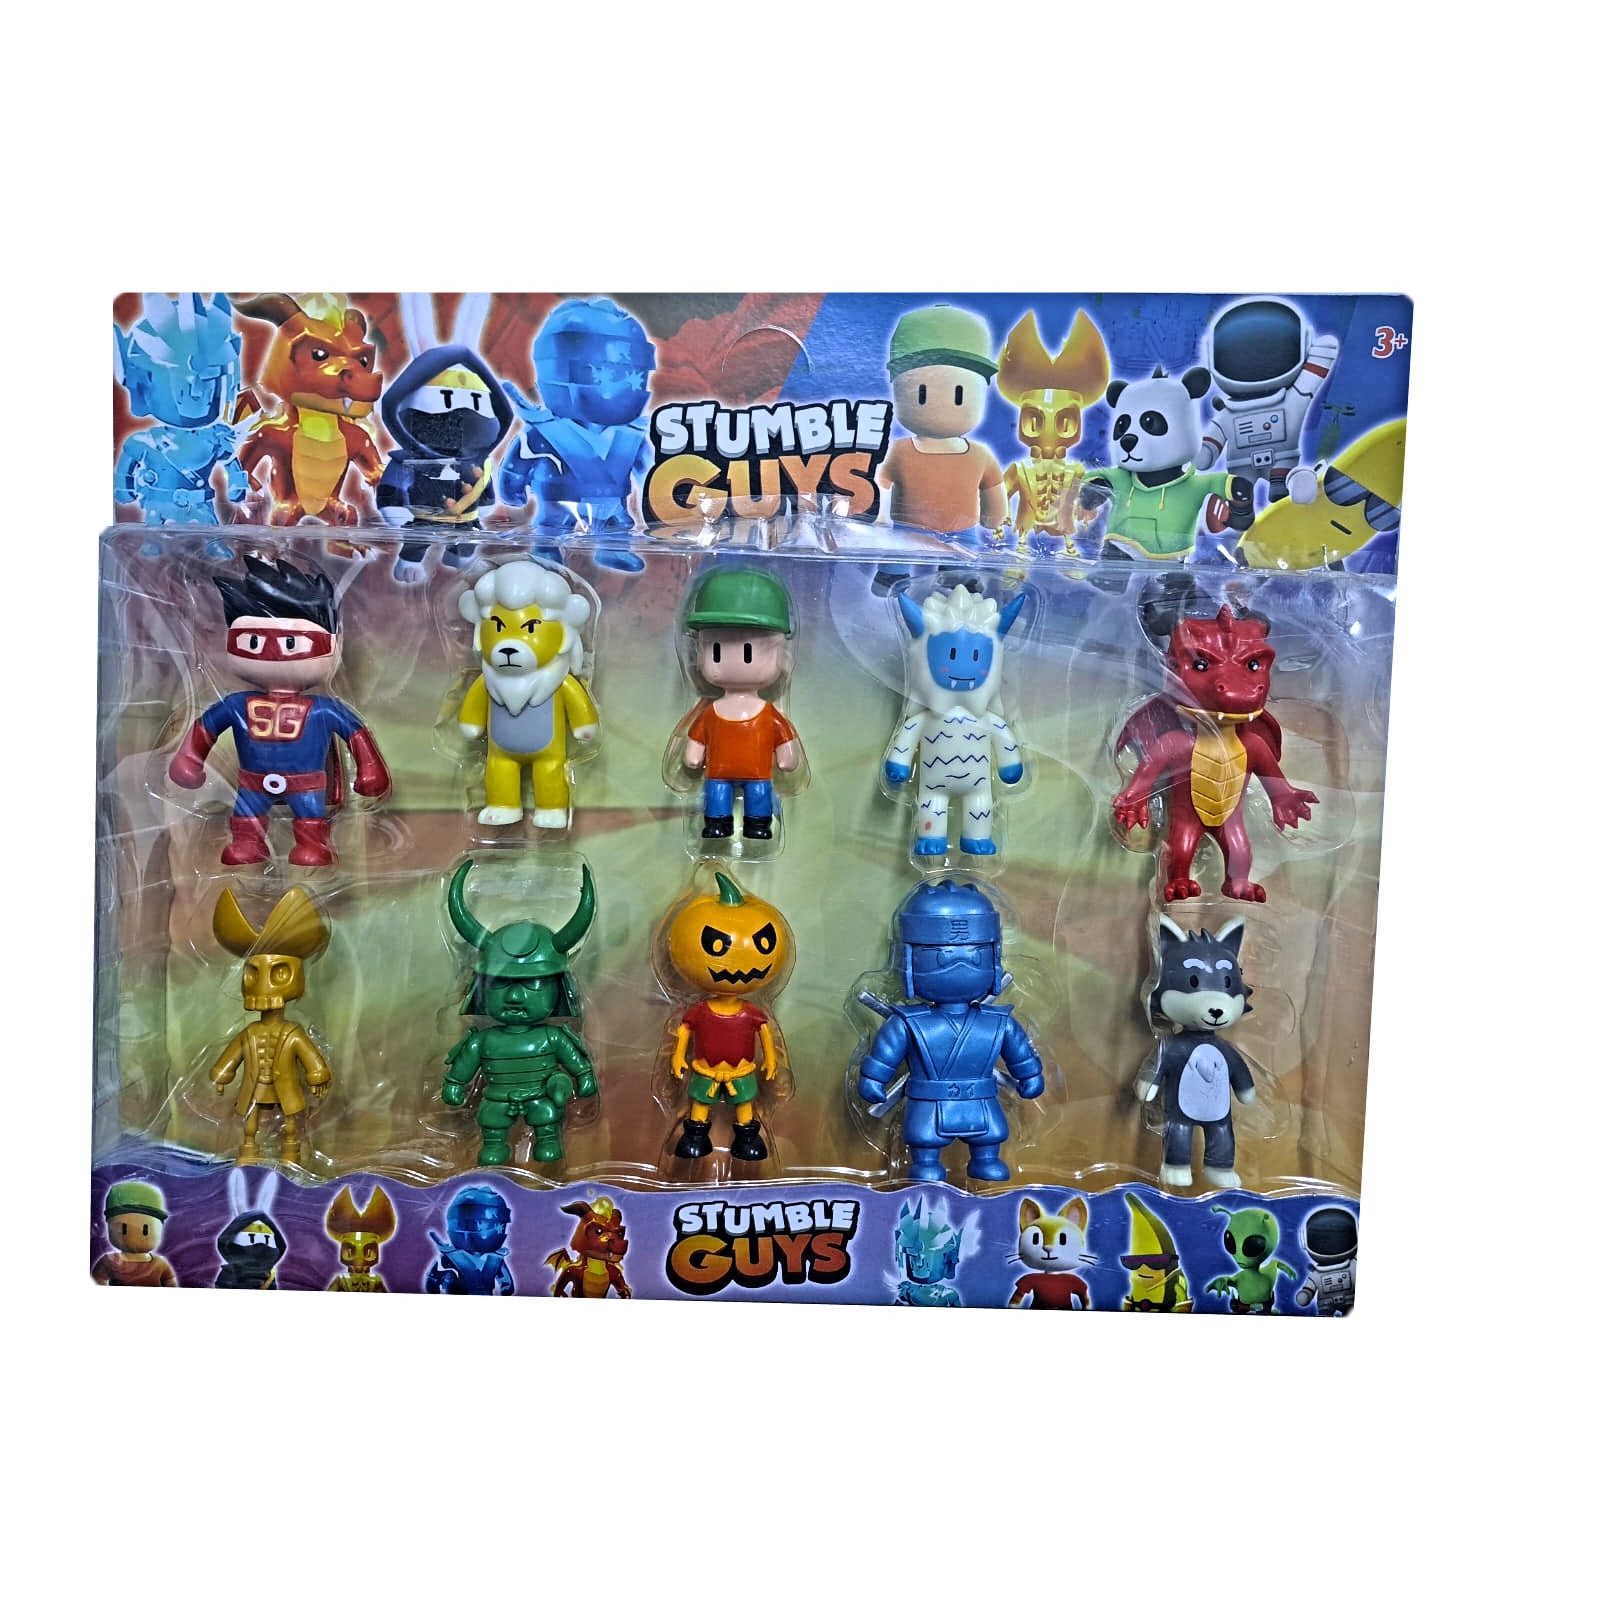 Stumble Guys 3D Mini Figures Series 2 Characters Original diramix, Choose